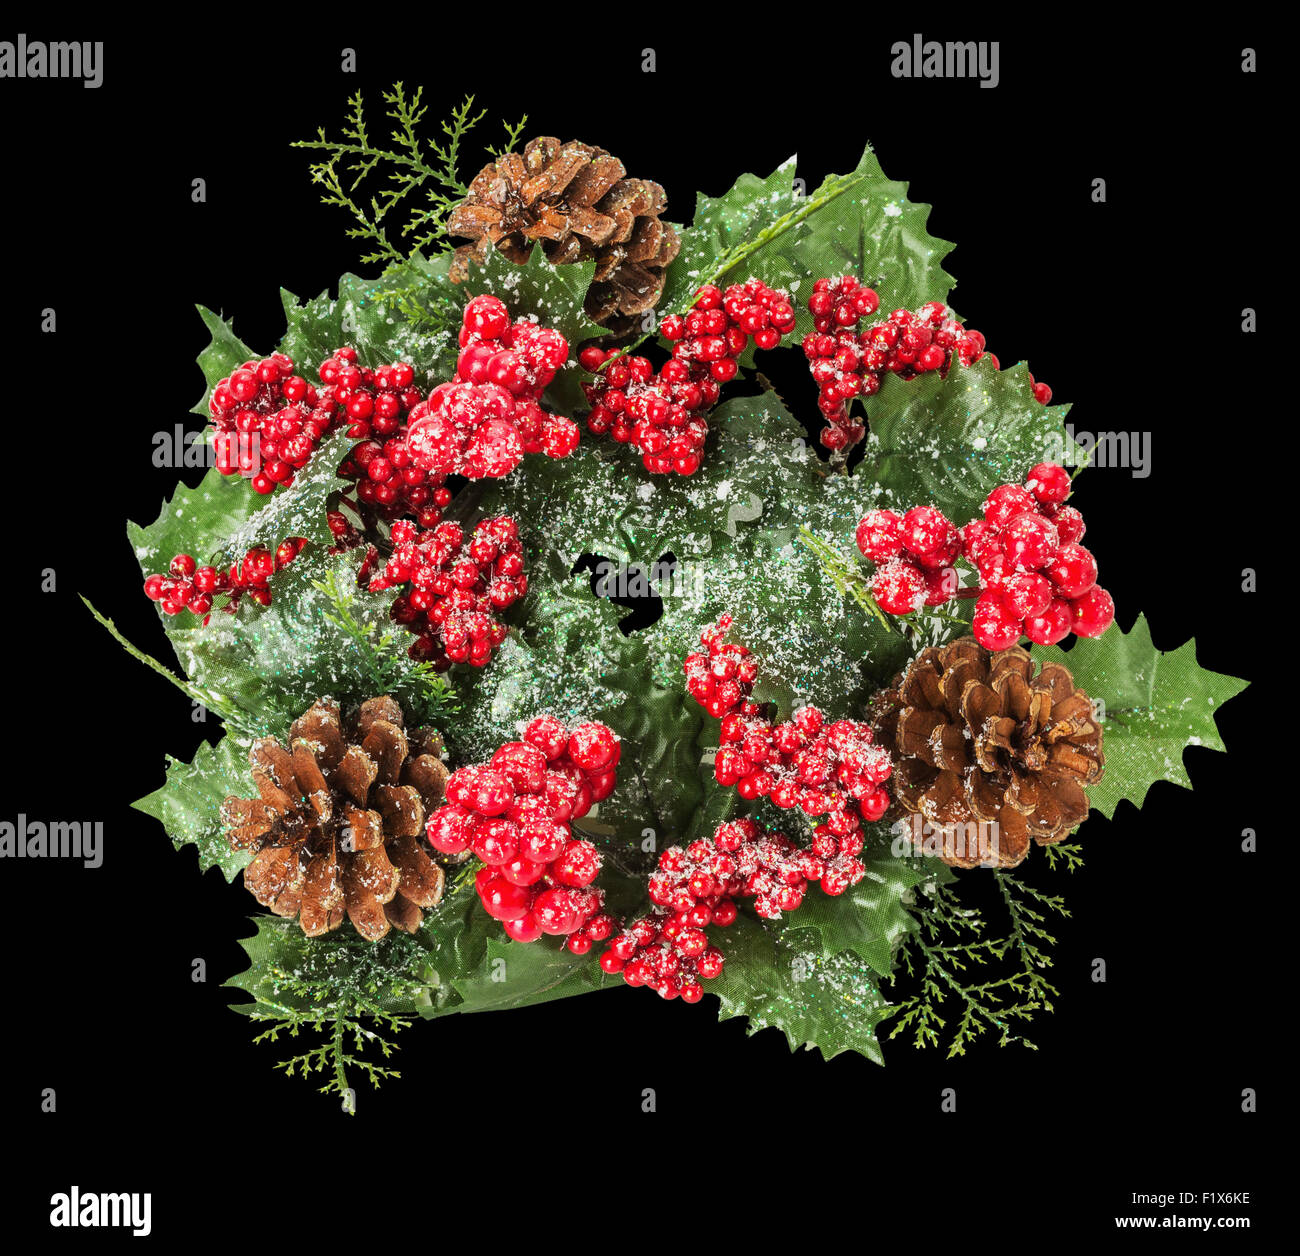 Christmas wreath on the black background. Stock Photo